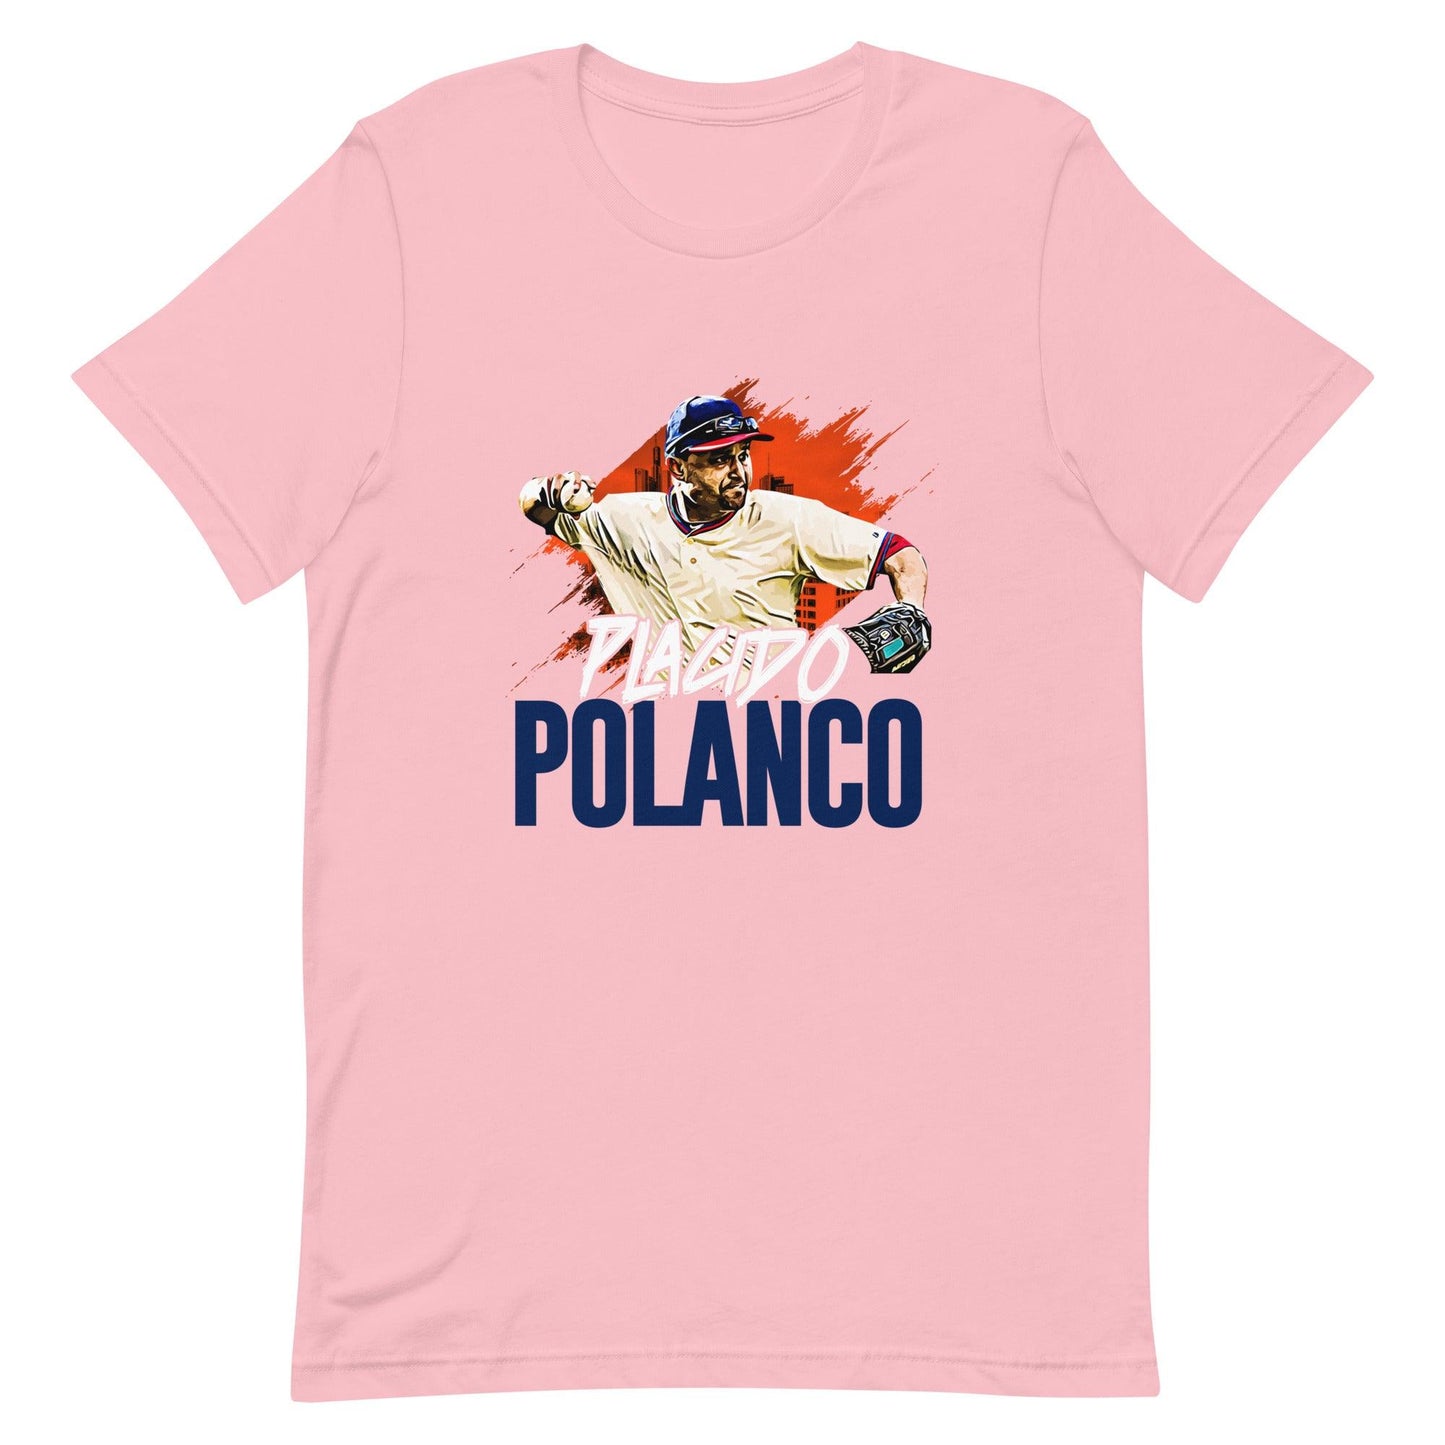 Placido Polanco "Gameday" t-shirt - Fan Arch